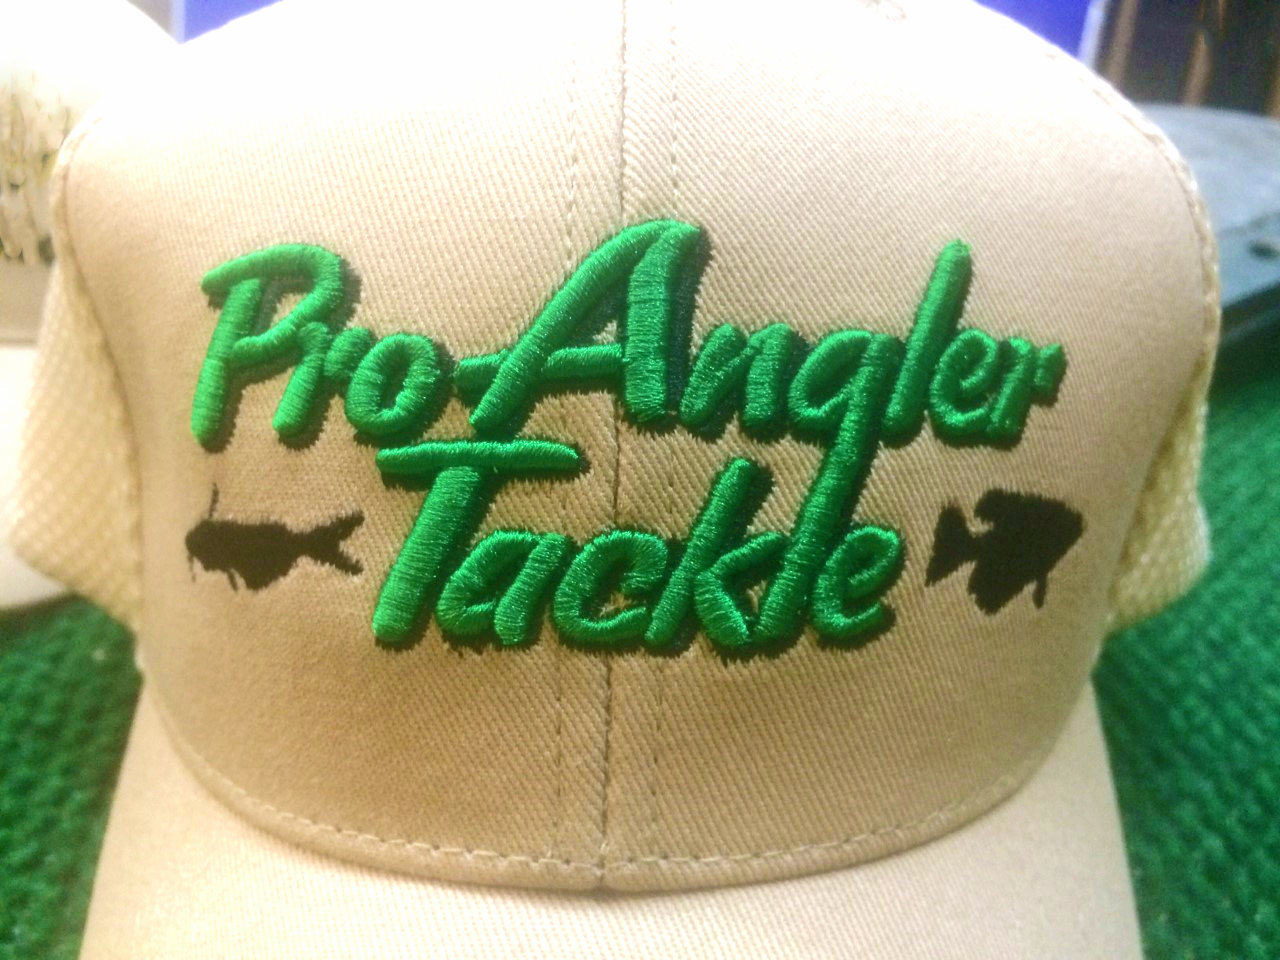 Proangler Tackle Cap - ProAngler Tackle